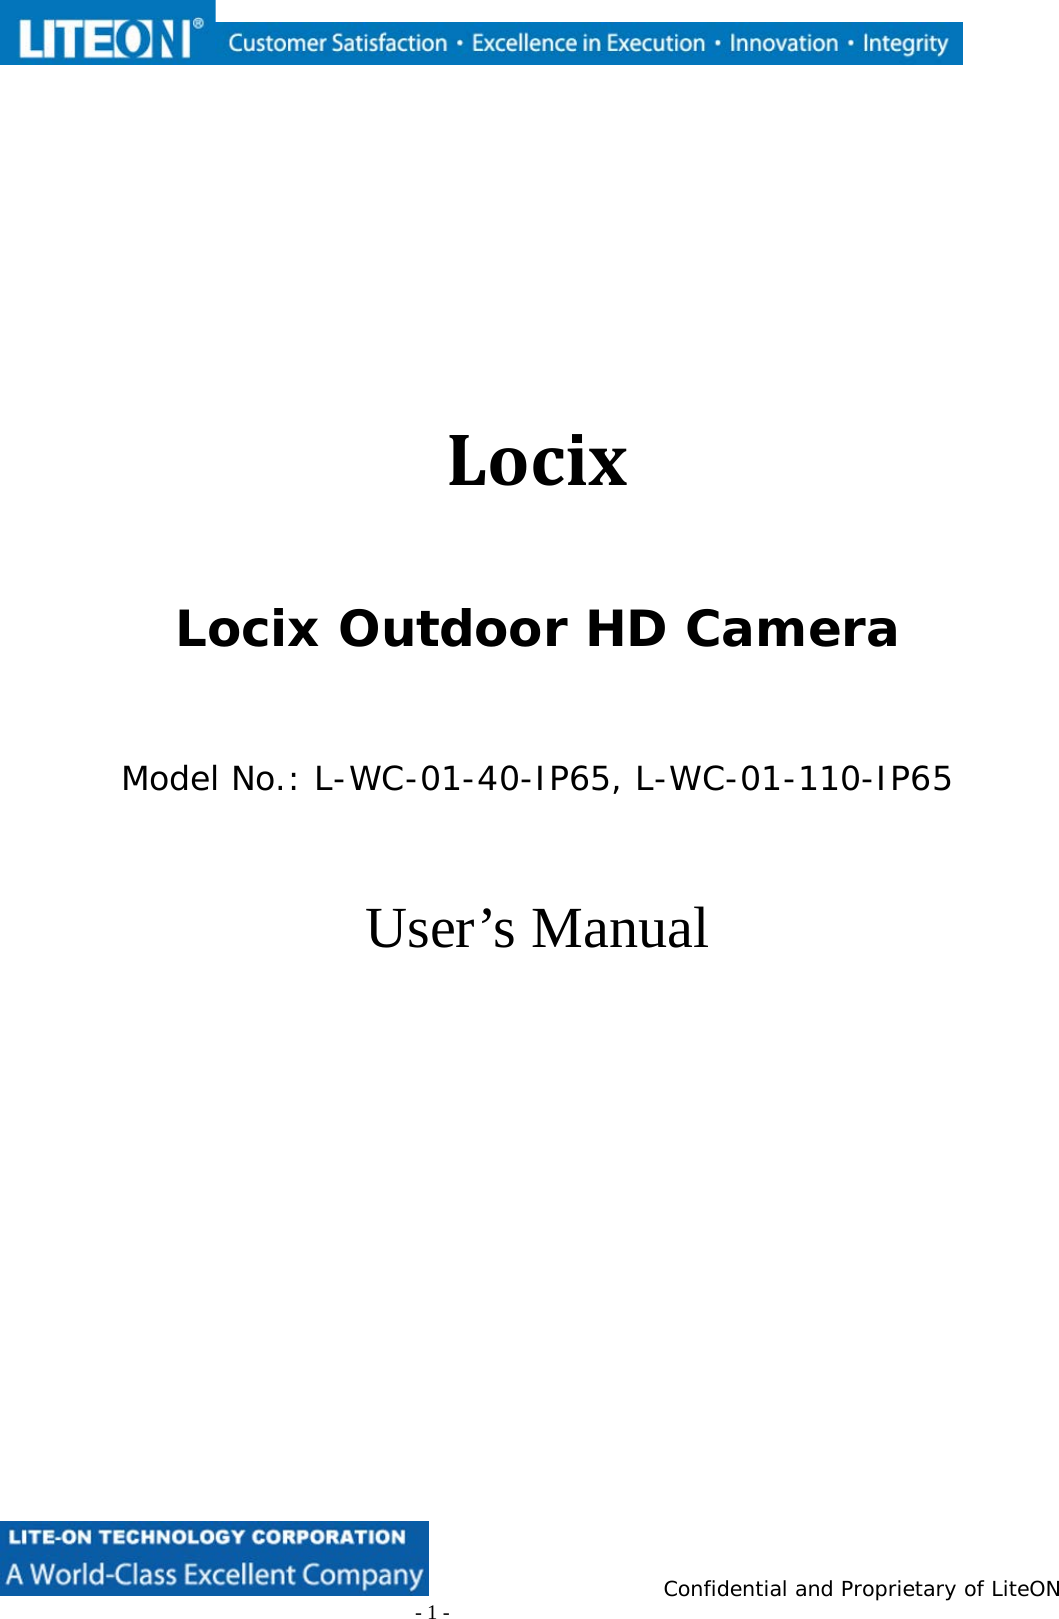                          Confidential and Proprietary of LiteON                         - 1 -           Locix  Locix Outdoor HD Camera  Model No.: L-WC-01-40-IP65, L-WC-01-110-IP65  User’s Manual       